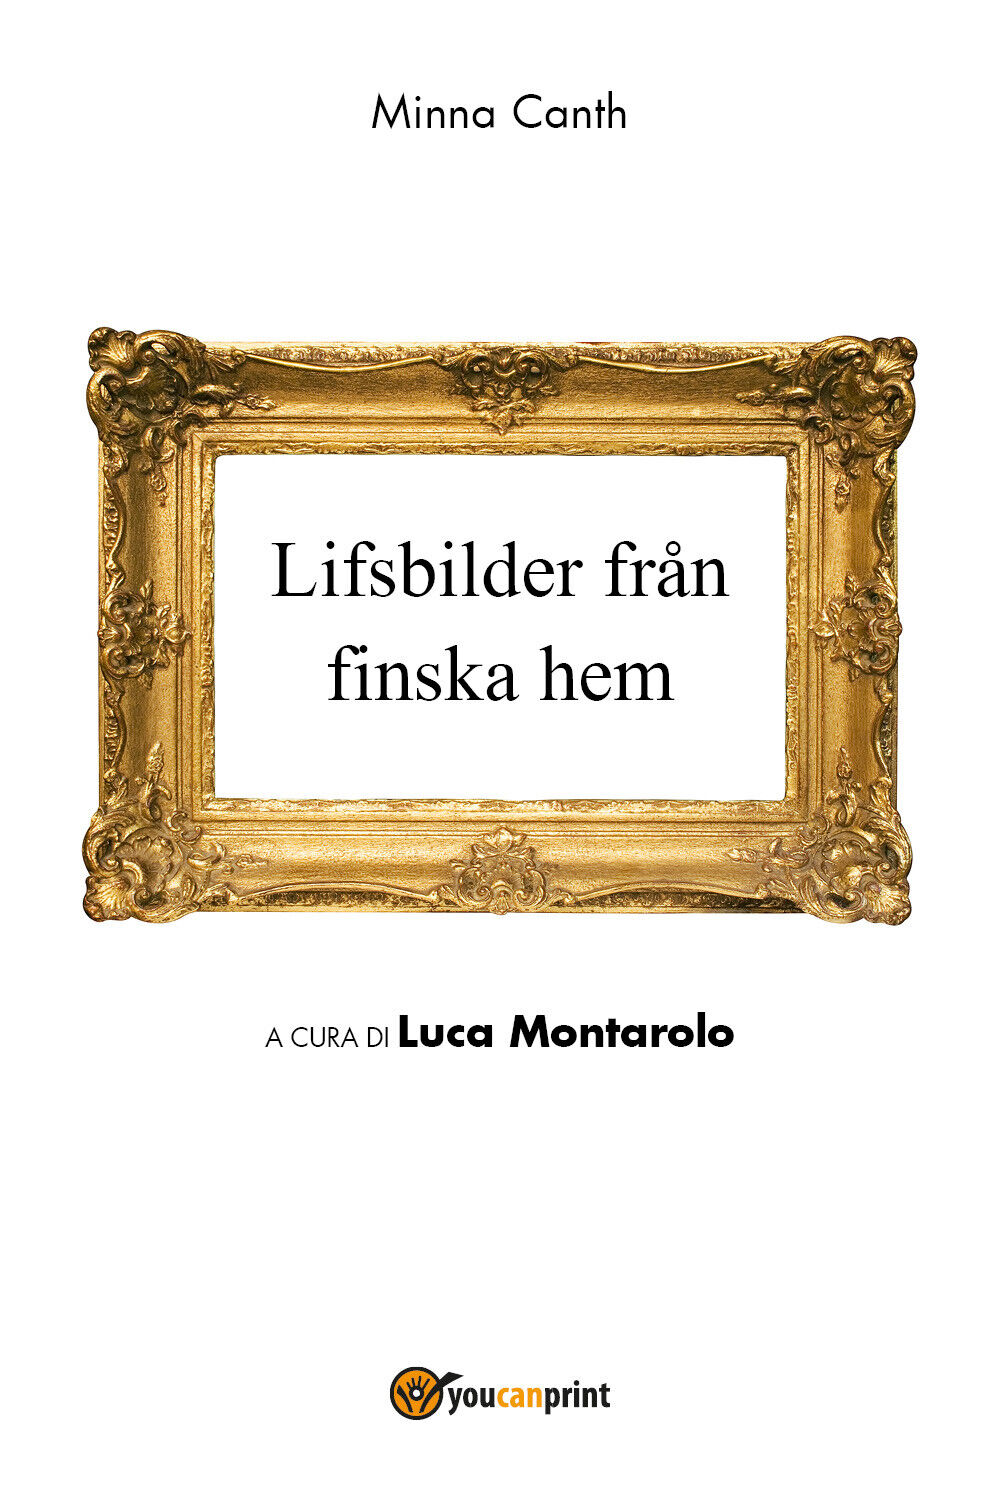 Lifsbilder fr?n finska hem,  Minna Canth, L. Montarolo,  2018,  Youcanprint